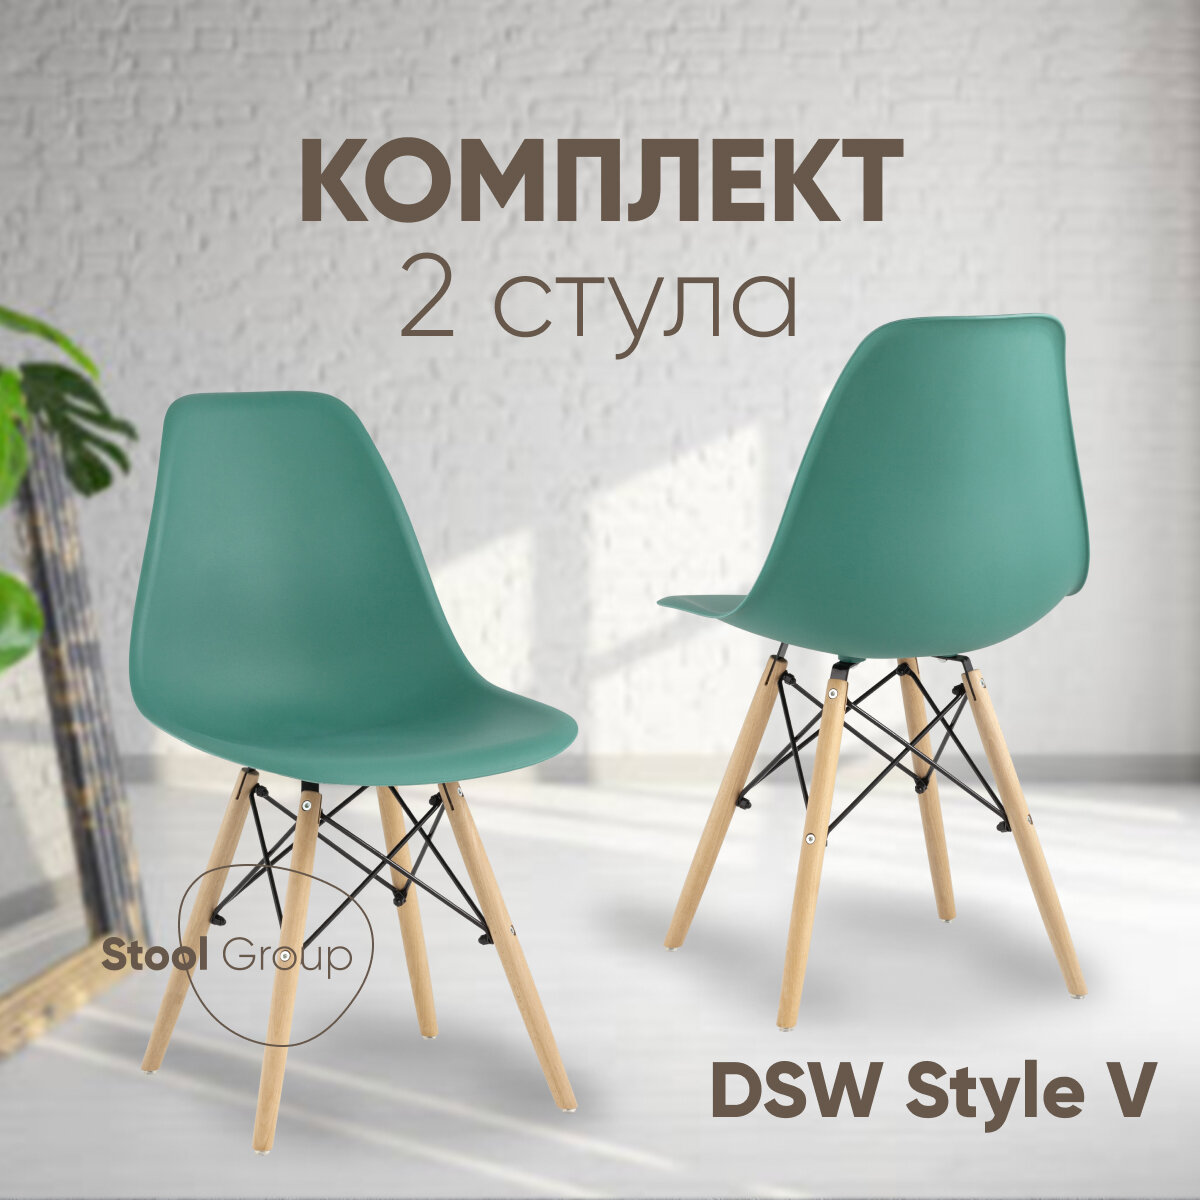 Стул для кухни DSW Style V, серо-зеленый (комплект 2 стула)